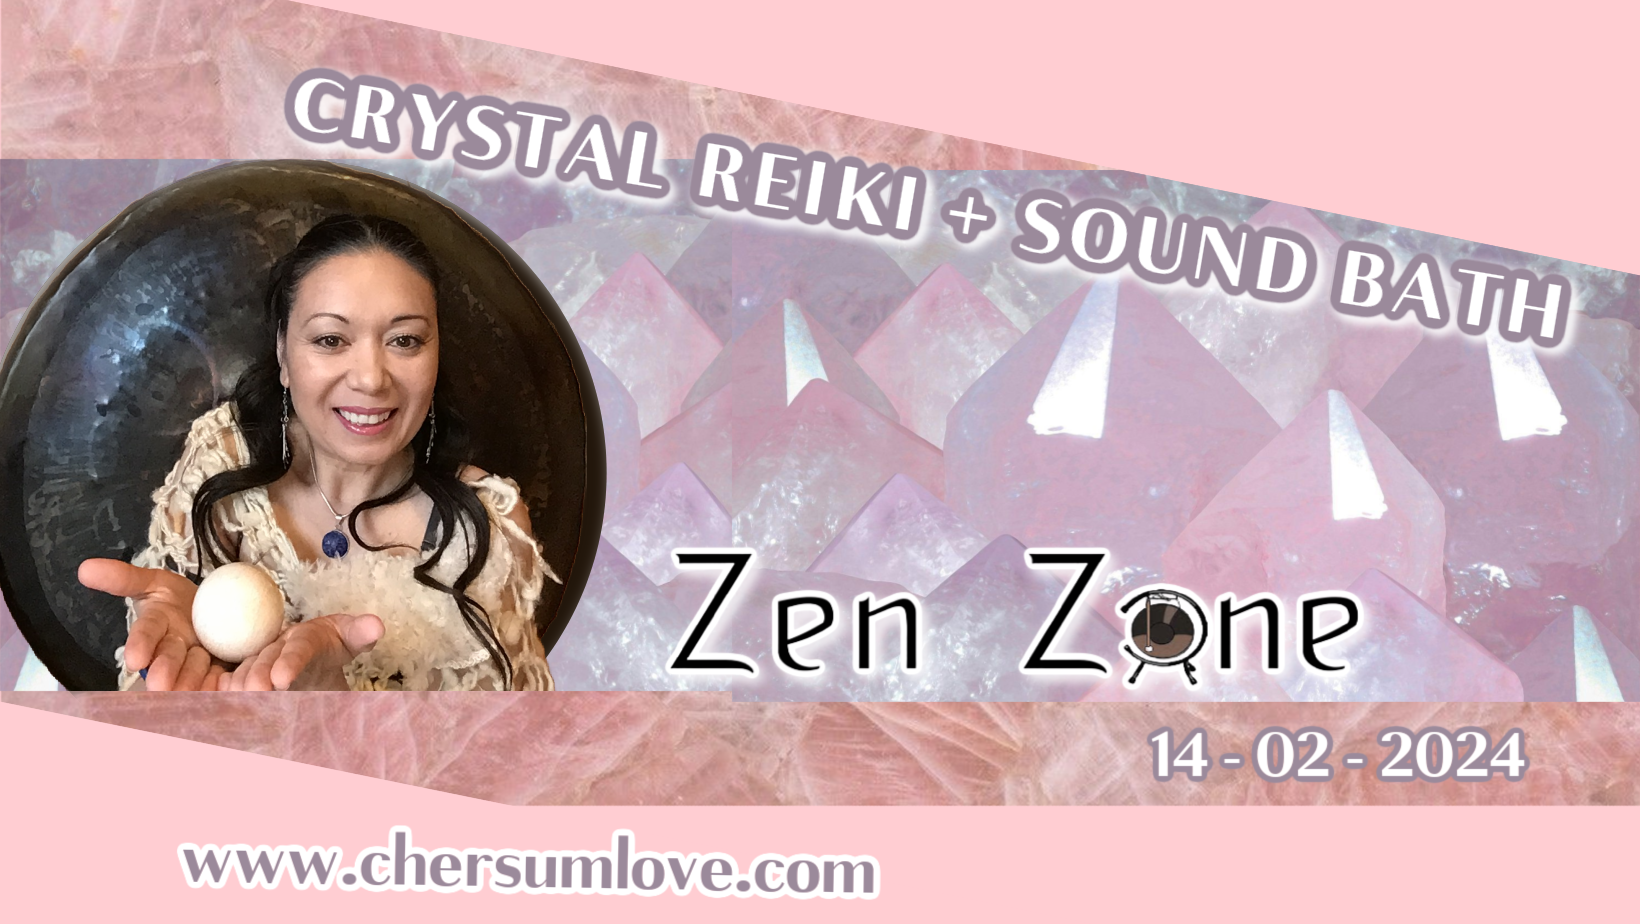 Crystal Reiki + Sound Bath with Cher Sum Love